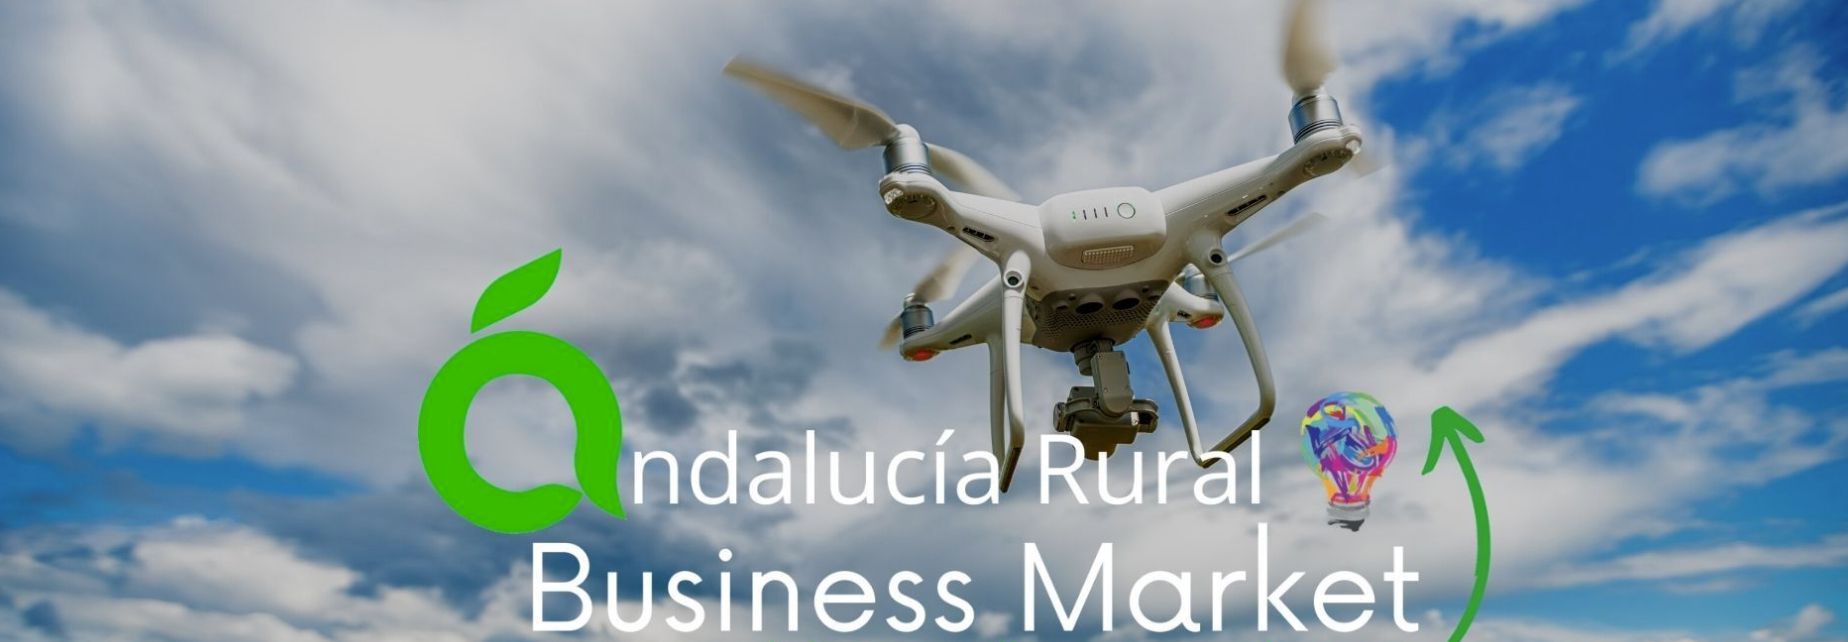 Andaluc%C3%ADa Rural Business Market f5bd55a7